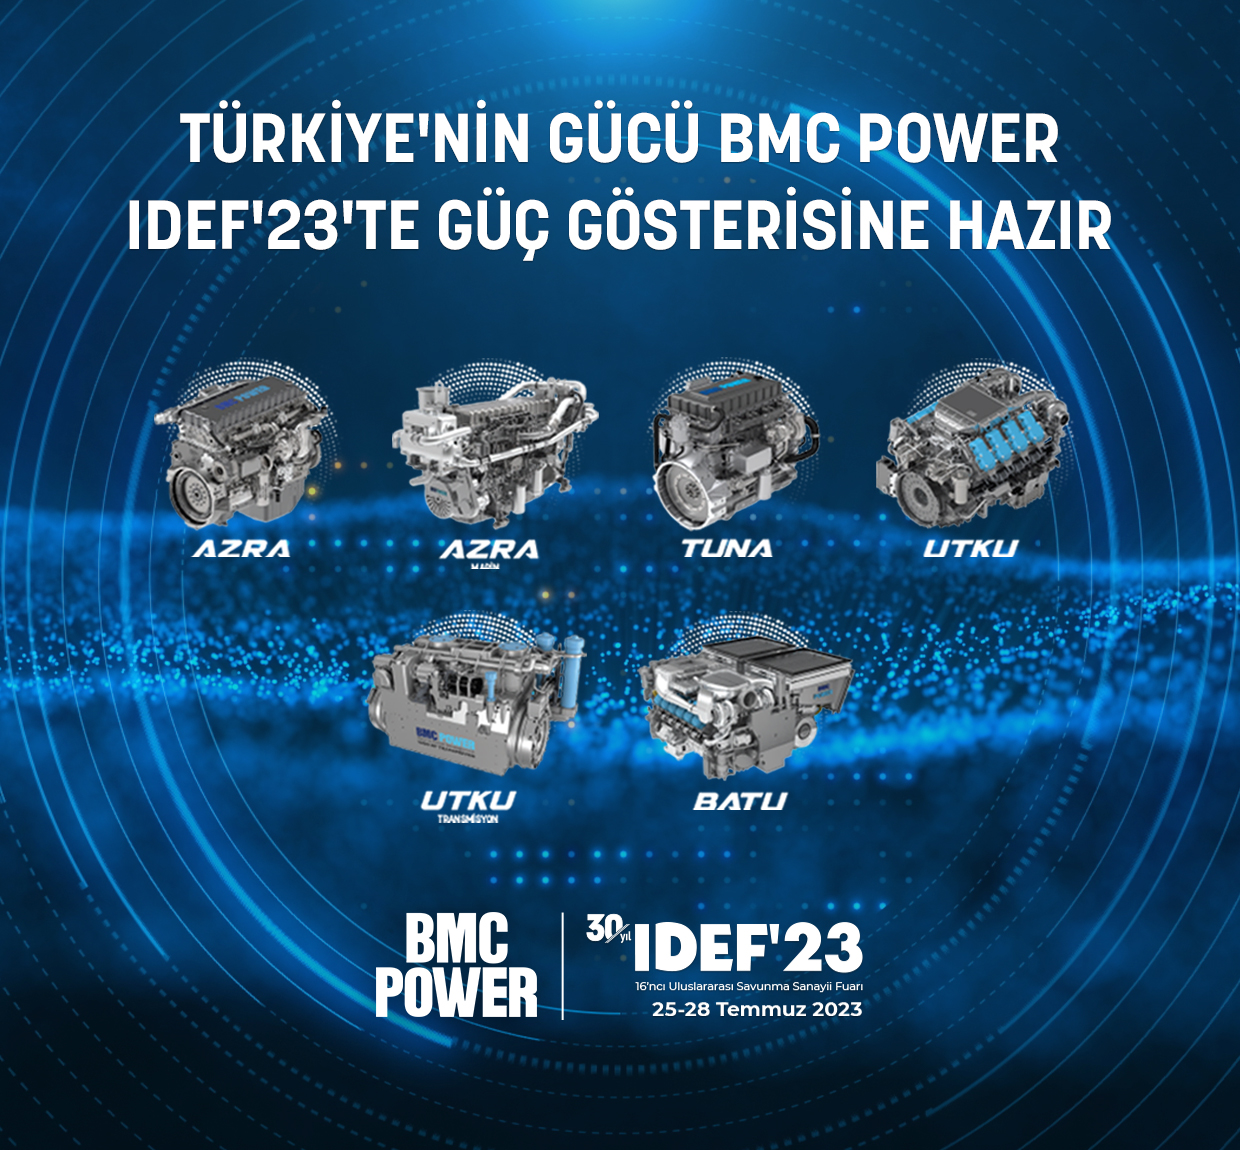 BMC Power